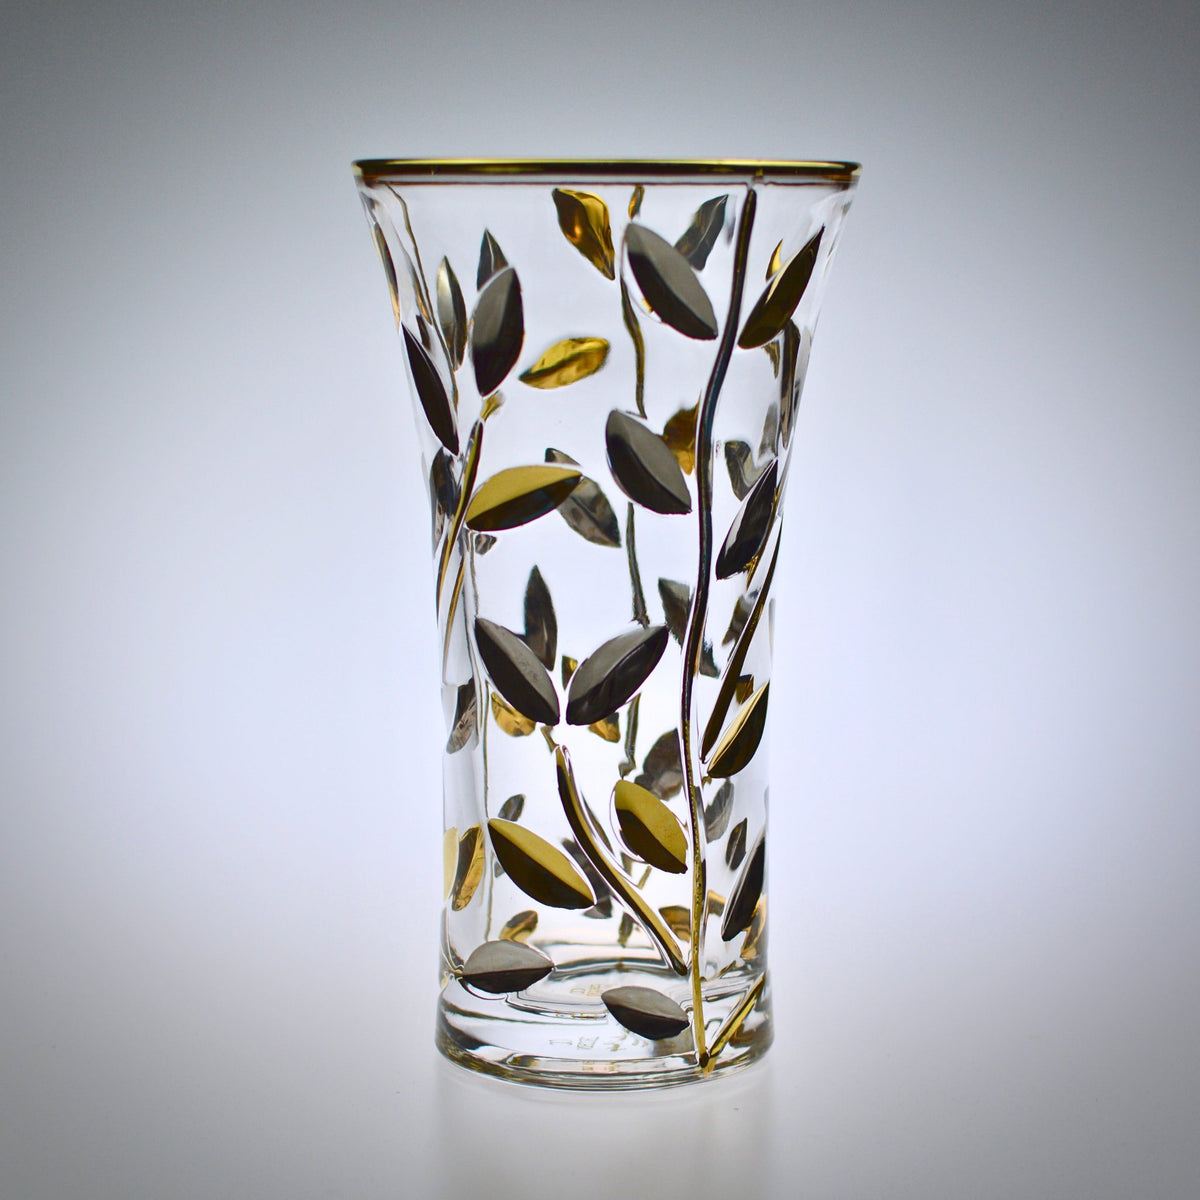 Italian Crystal Small Flowervine Vase, Platinum and Gold - My Italian Decor